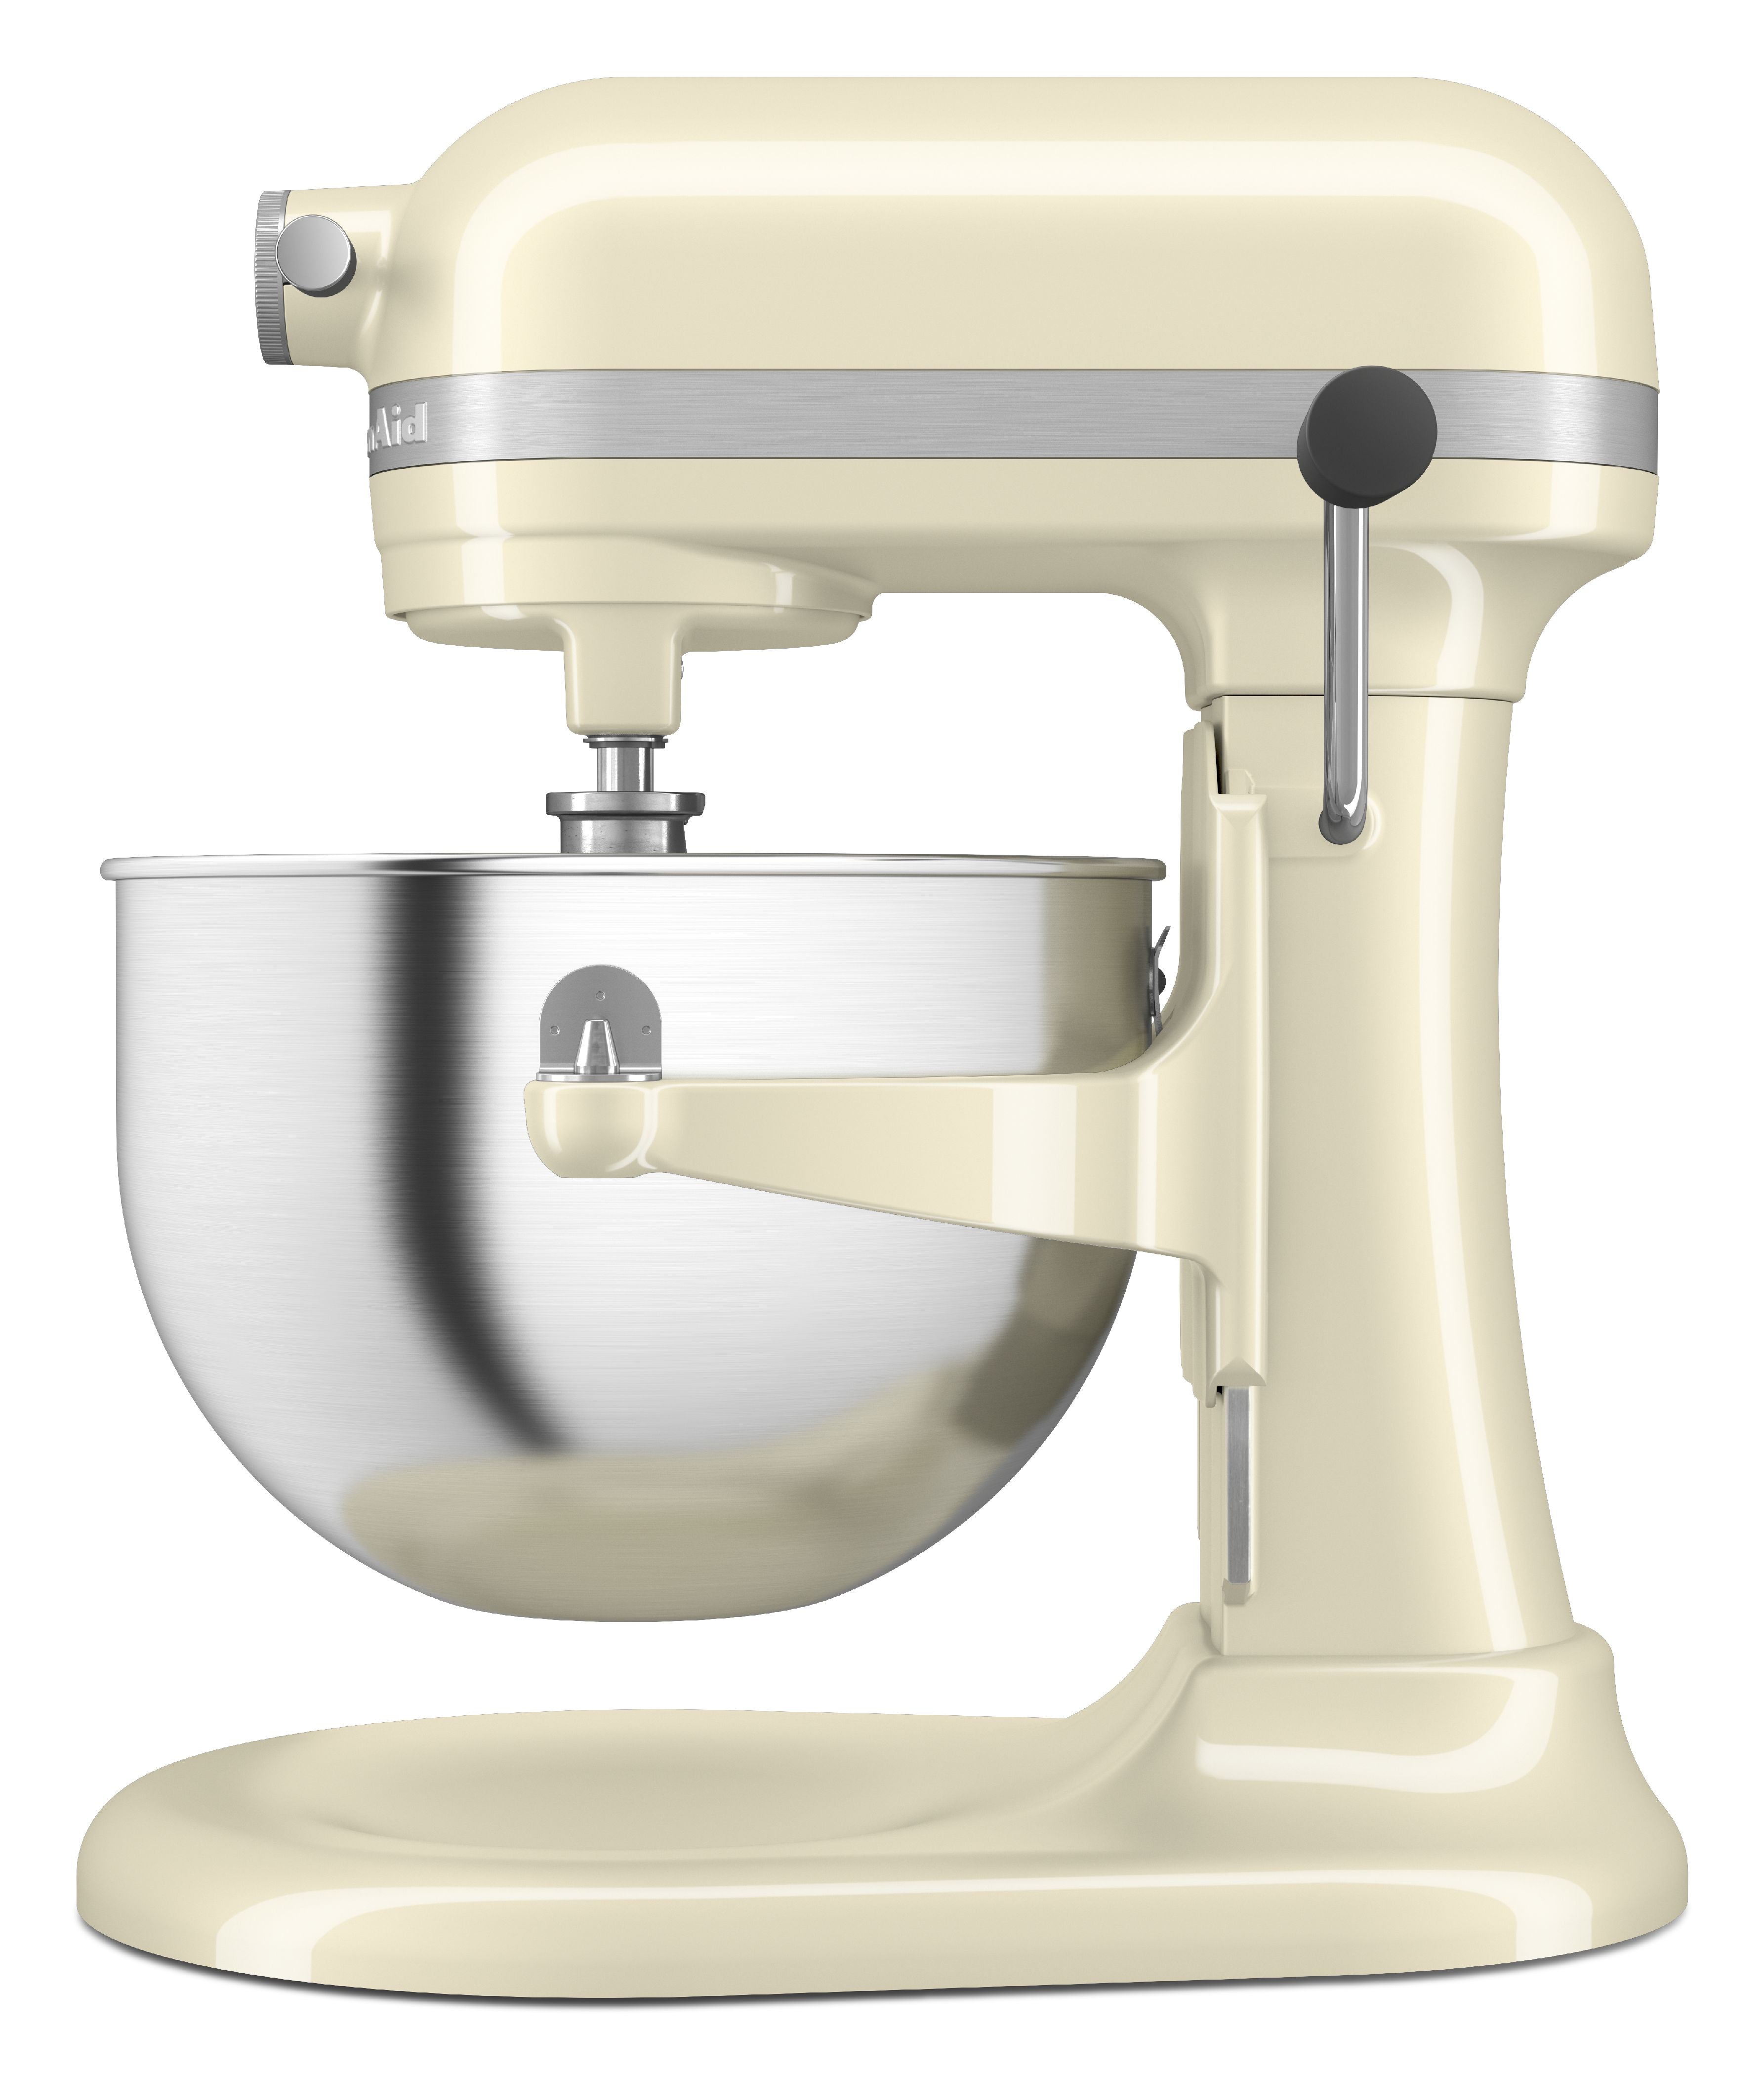 Kökhjälp Artisan Bowl Lift Stand Mixer 5.6 L, Almond Cream